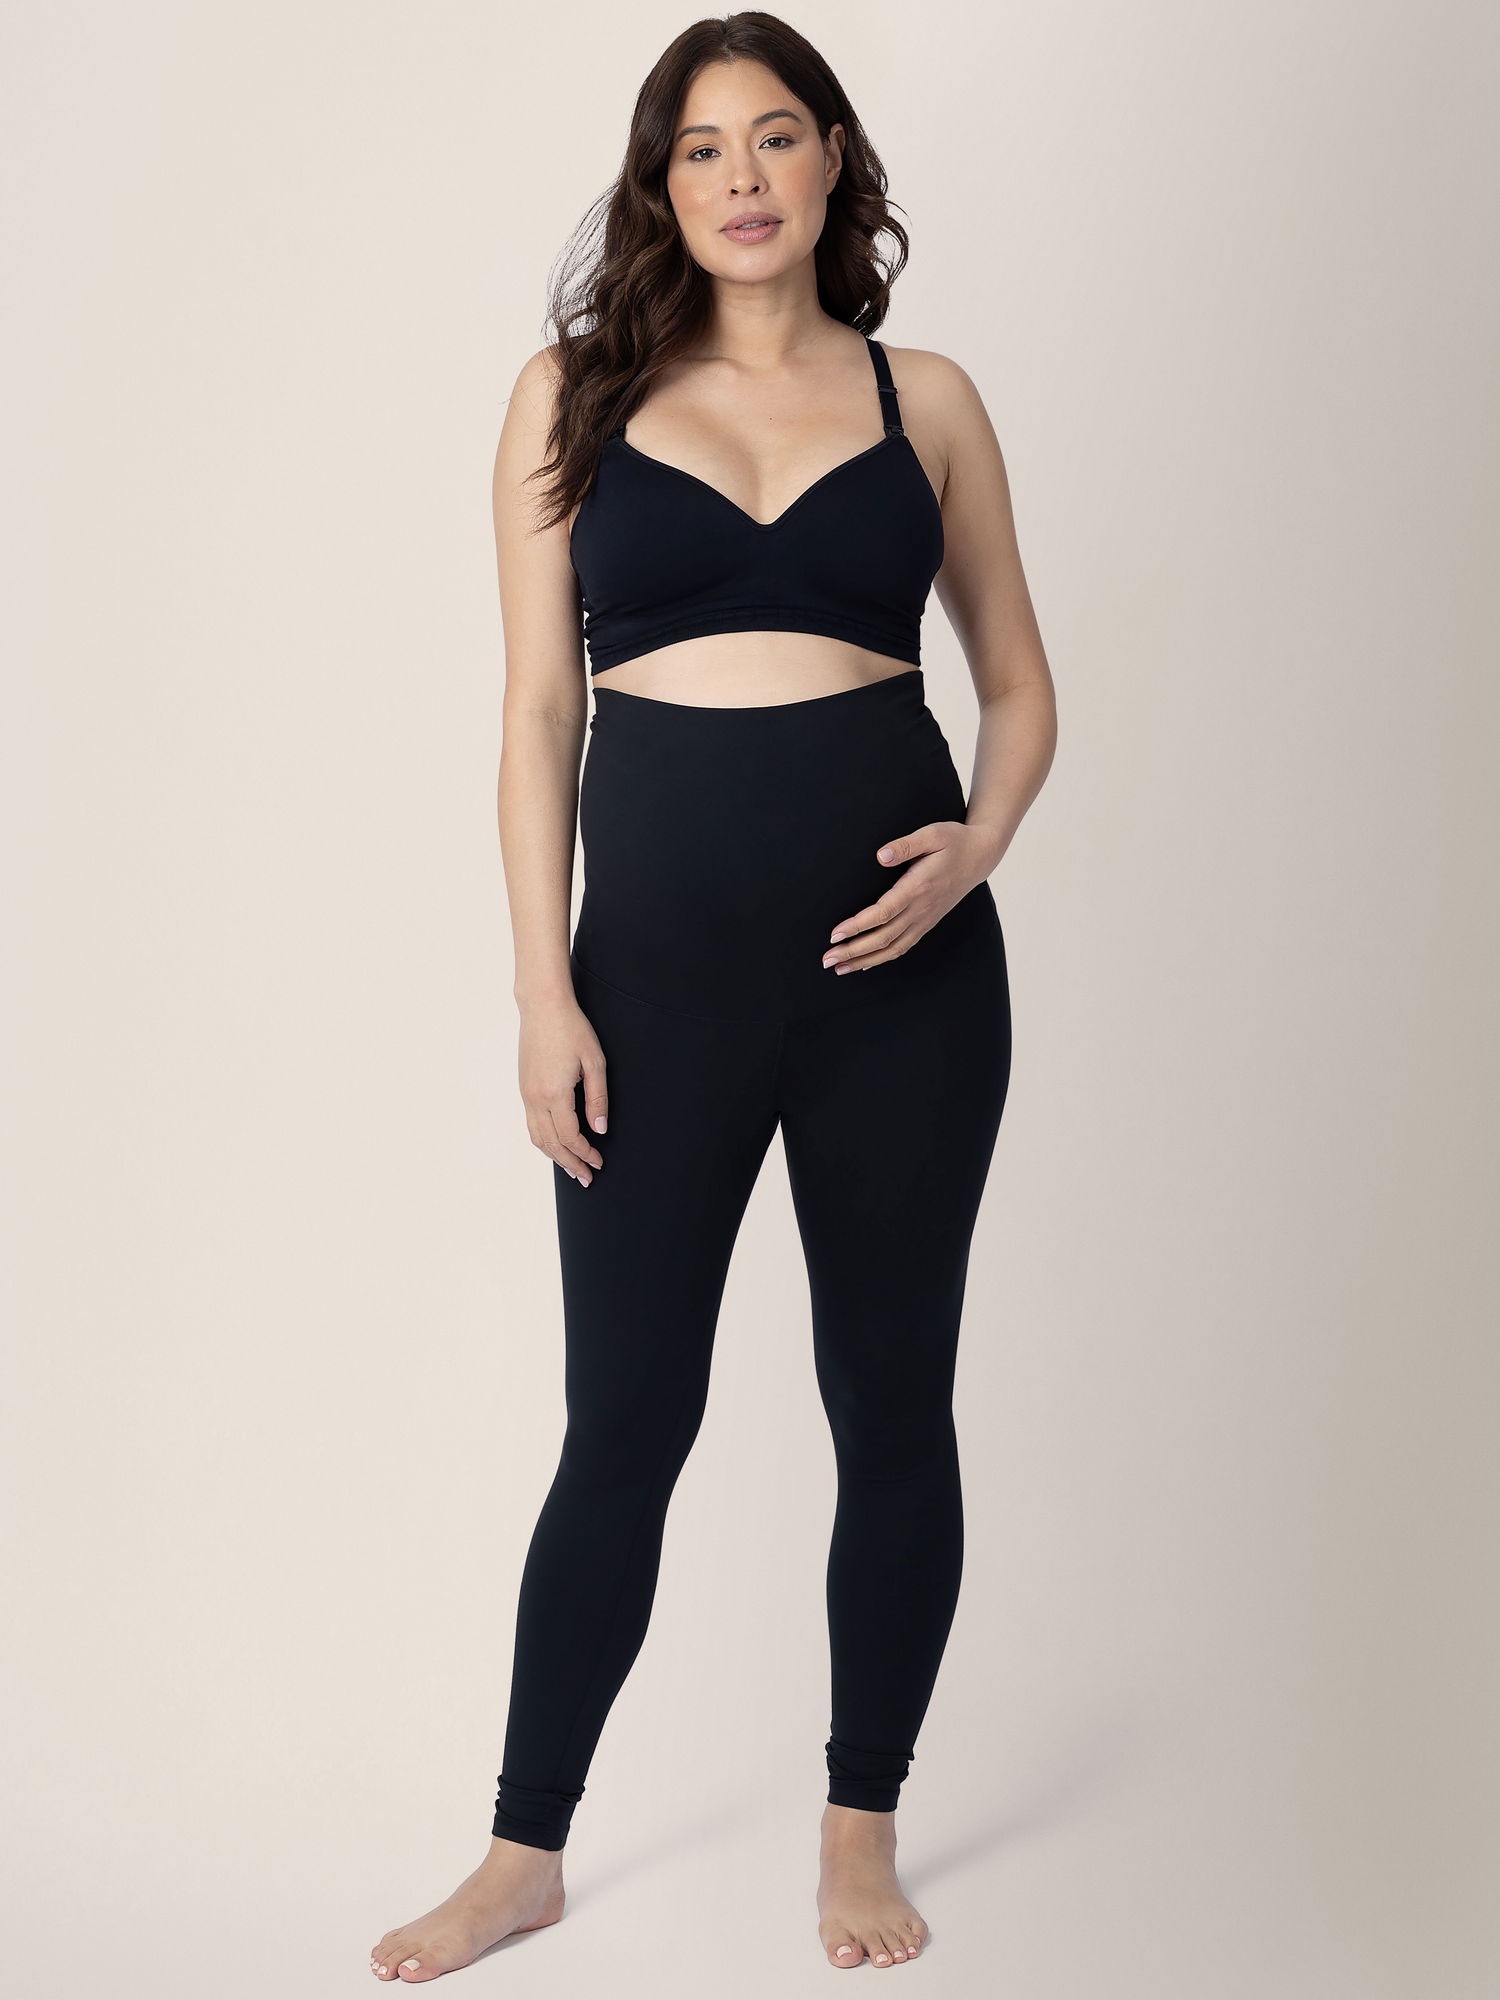 Viosi Maternity Leggings Over The Belly Soft Stretch Pregnancy